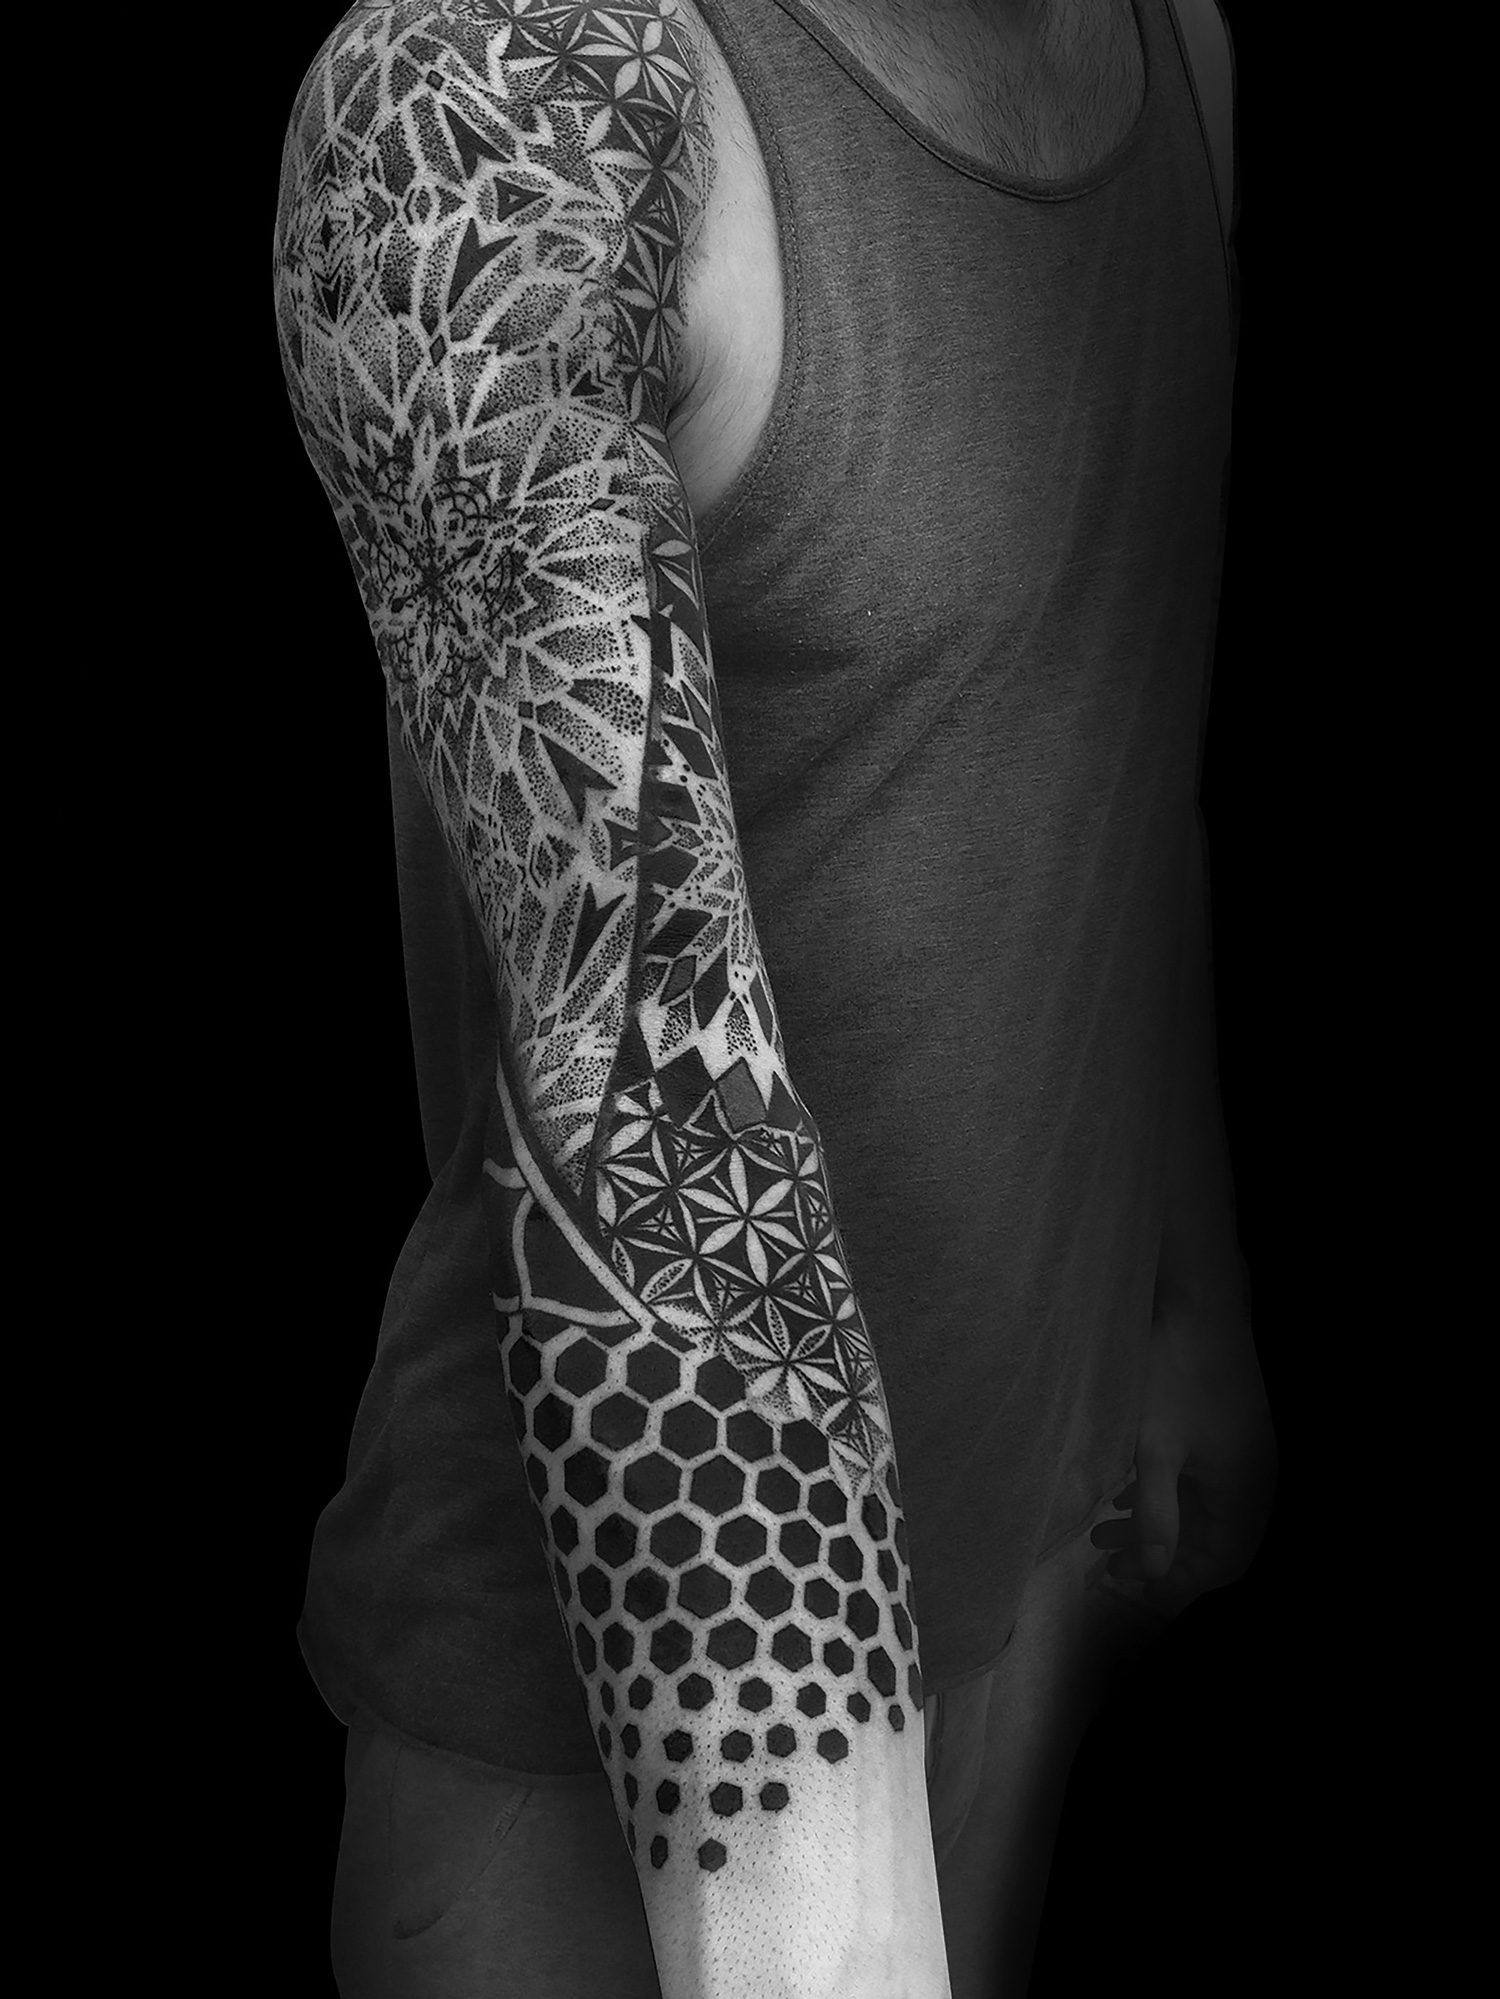 Katia Somerville - Matteo, arm tattoo